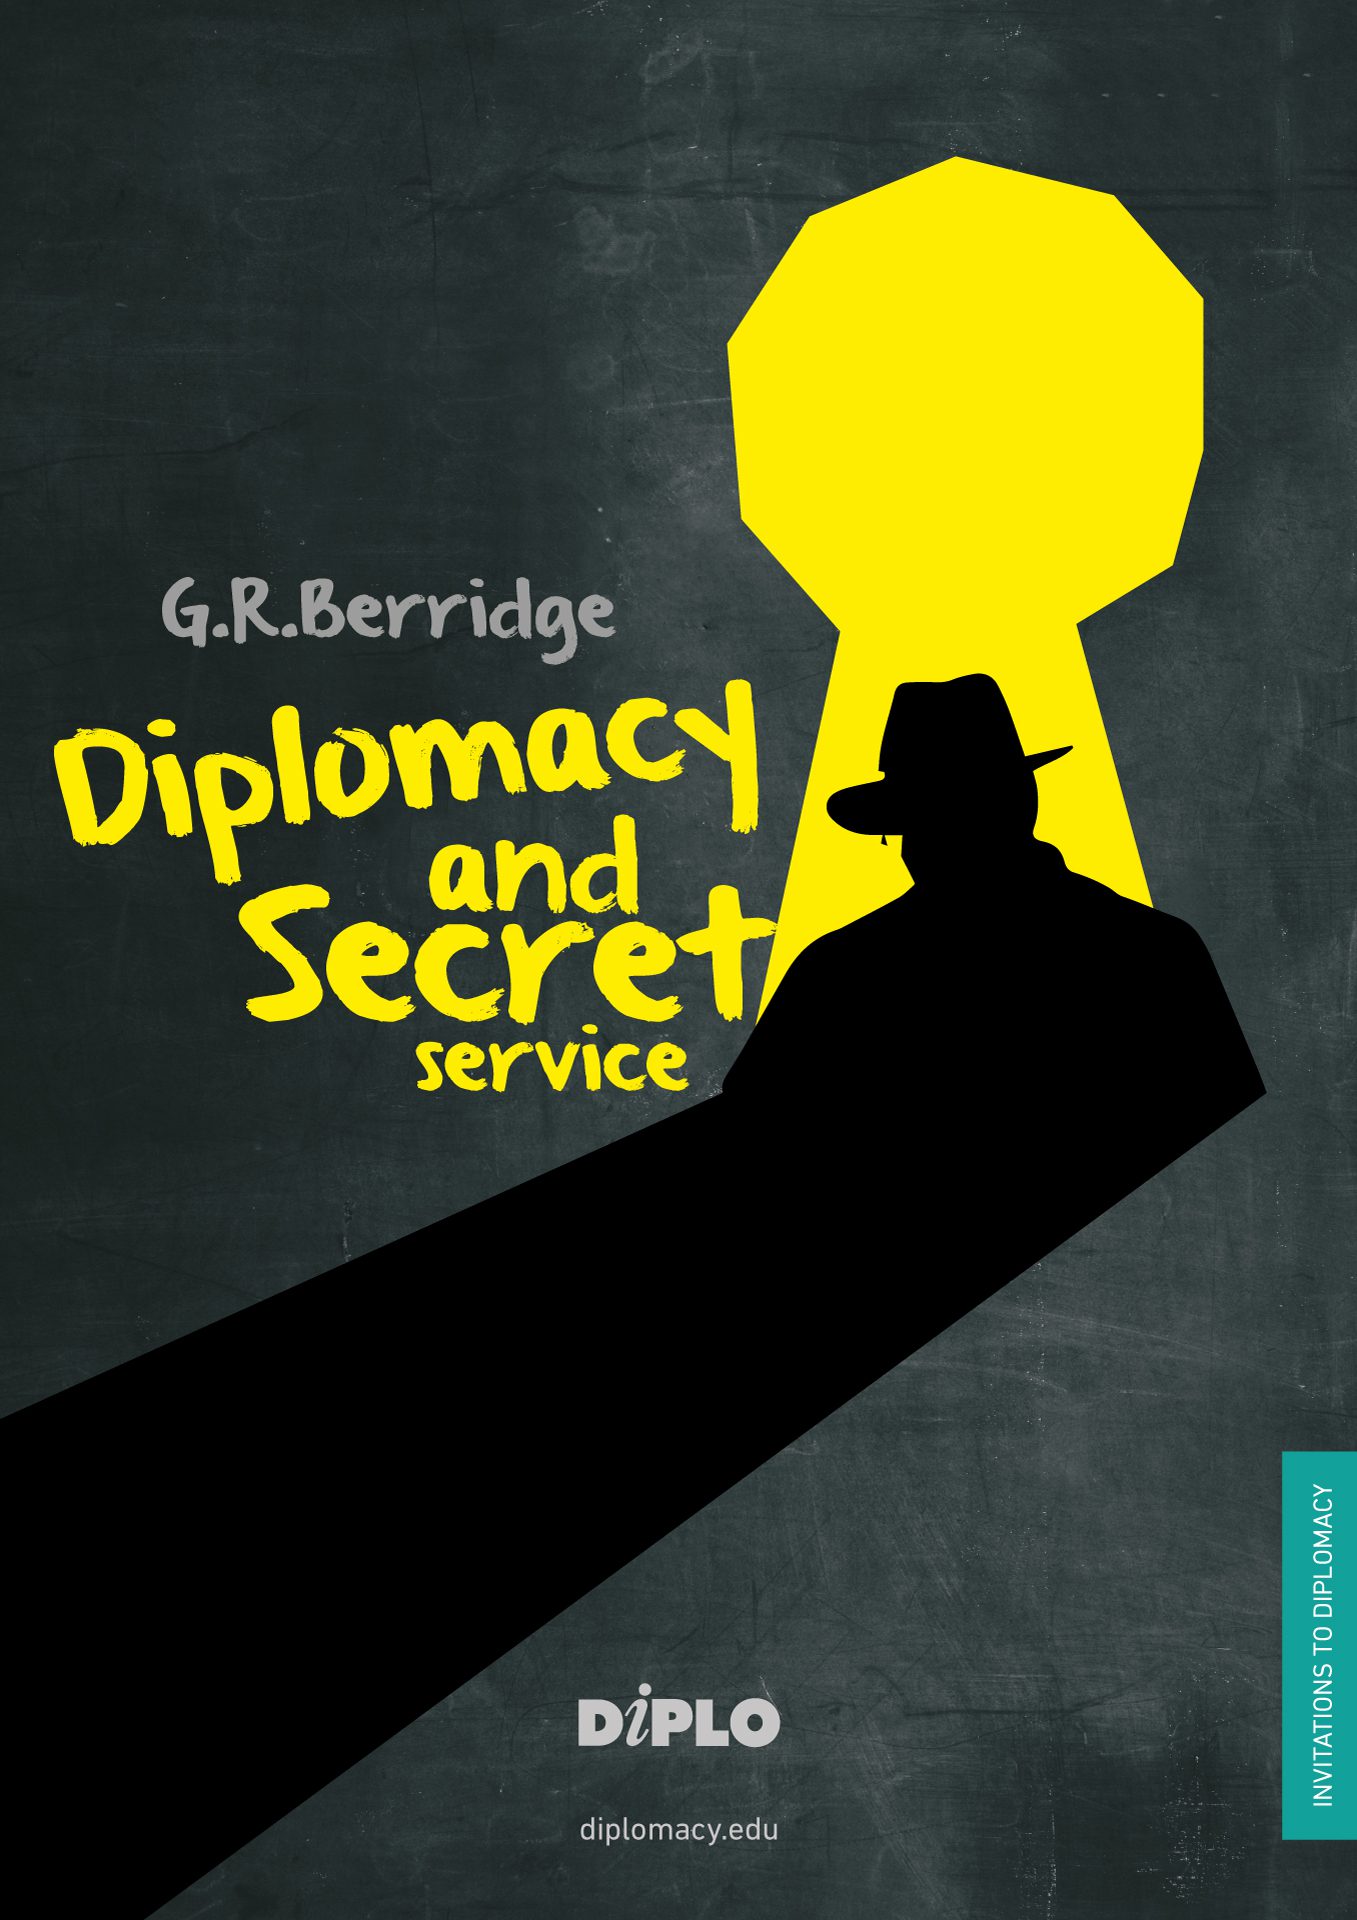 Diplo-publication_Diplomacy-and-Secret-service-G.R.Berridge_FINAL.jpg